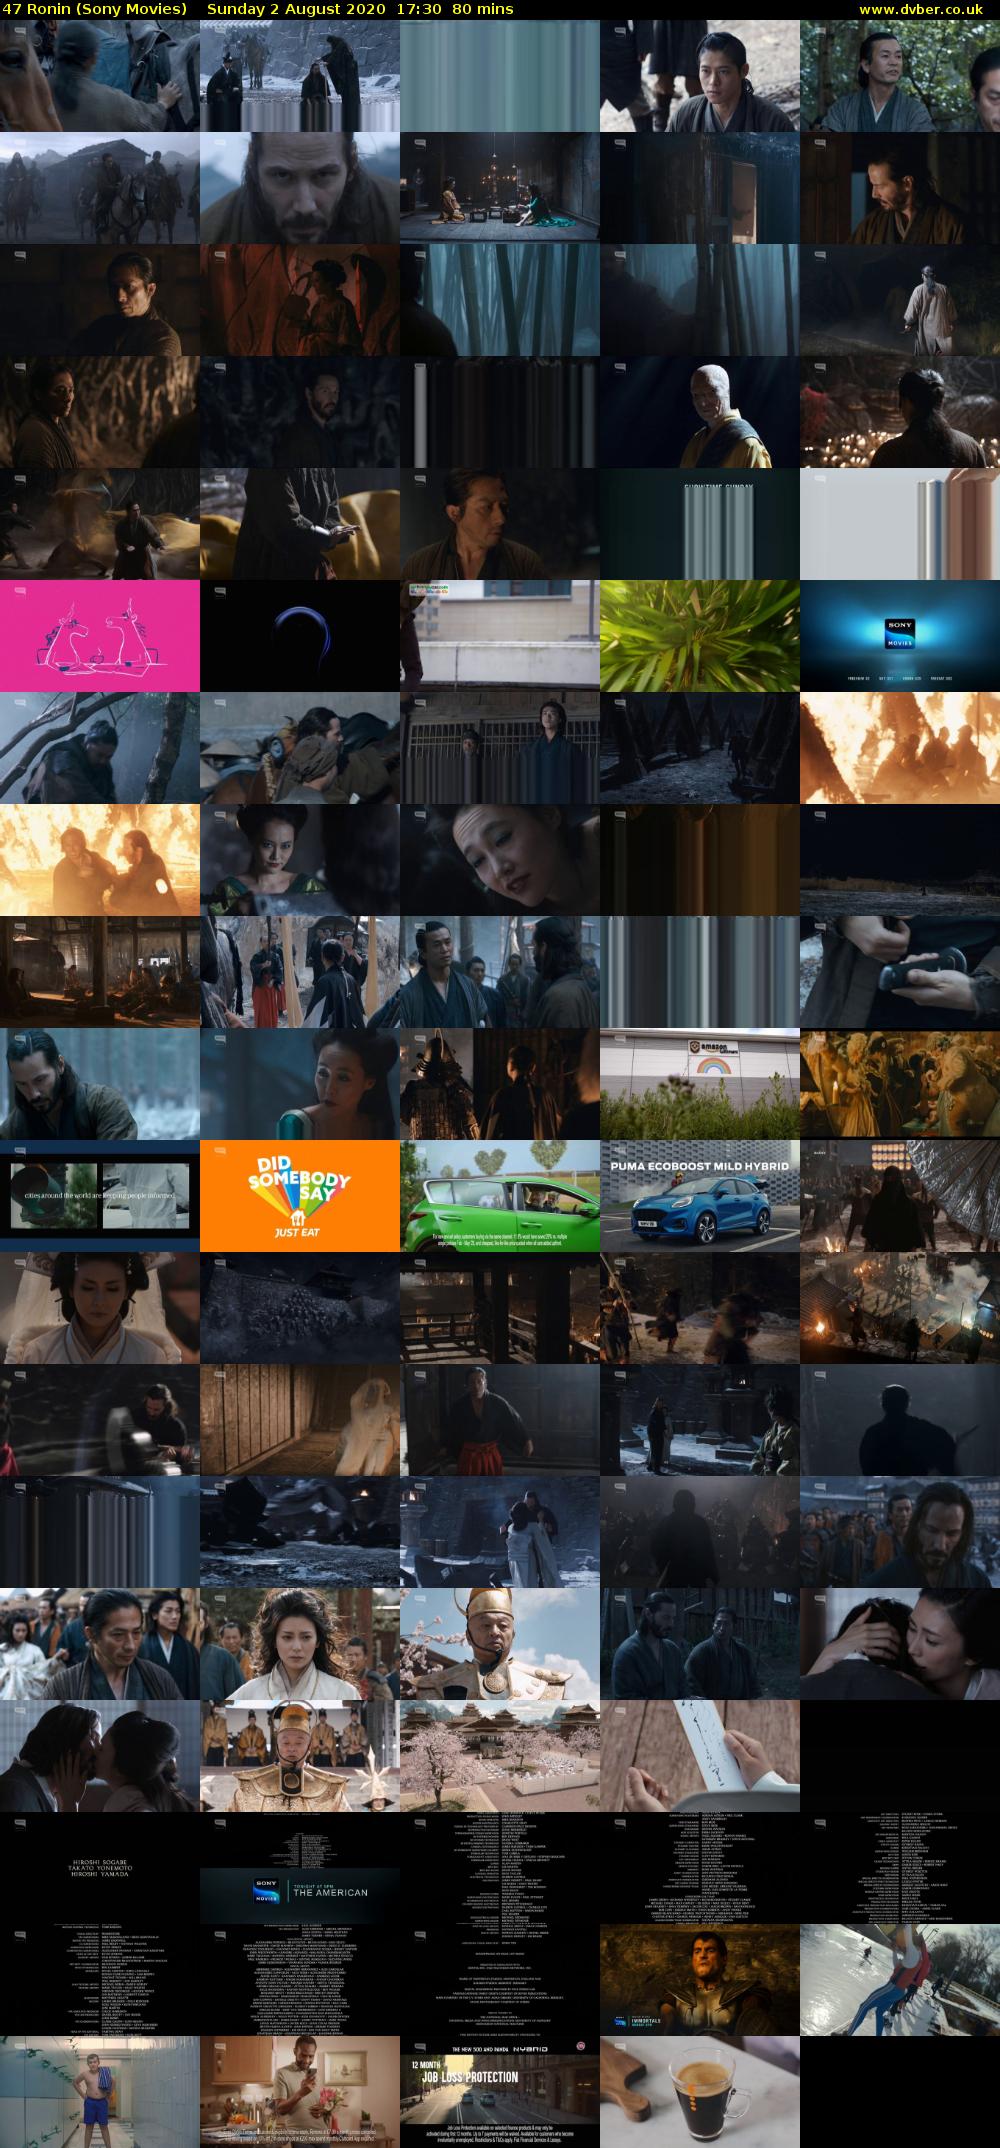 47 Ronin (Sony Movies) Sunday 2 August 2020 17:30 - 18:50